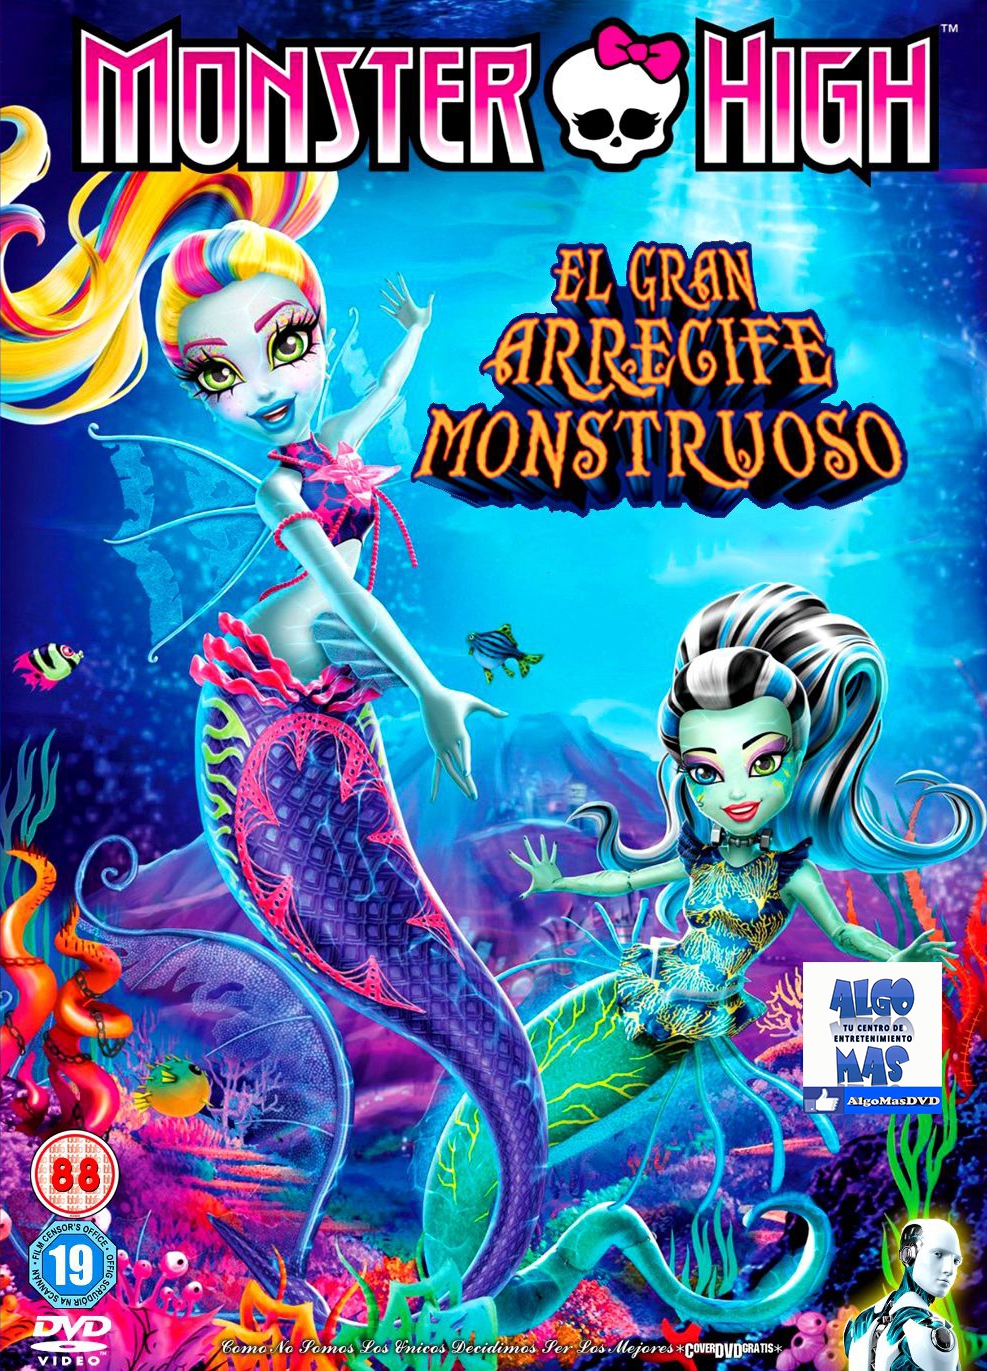 Monster High: El gran arrecife monstruoso (2016)